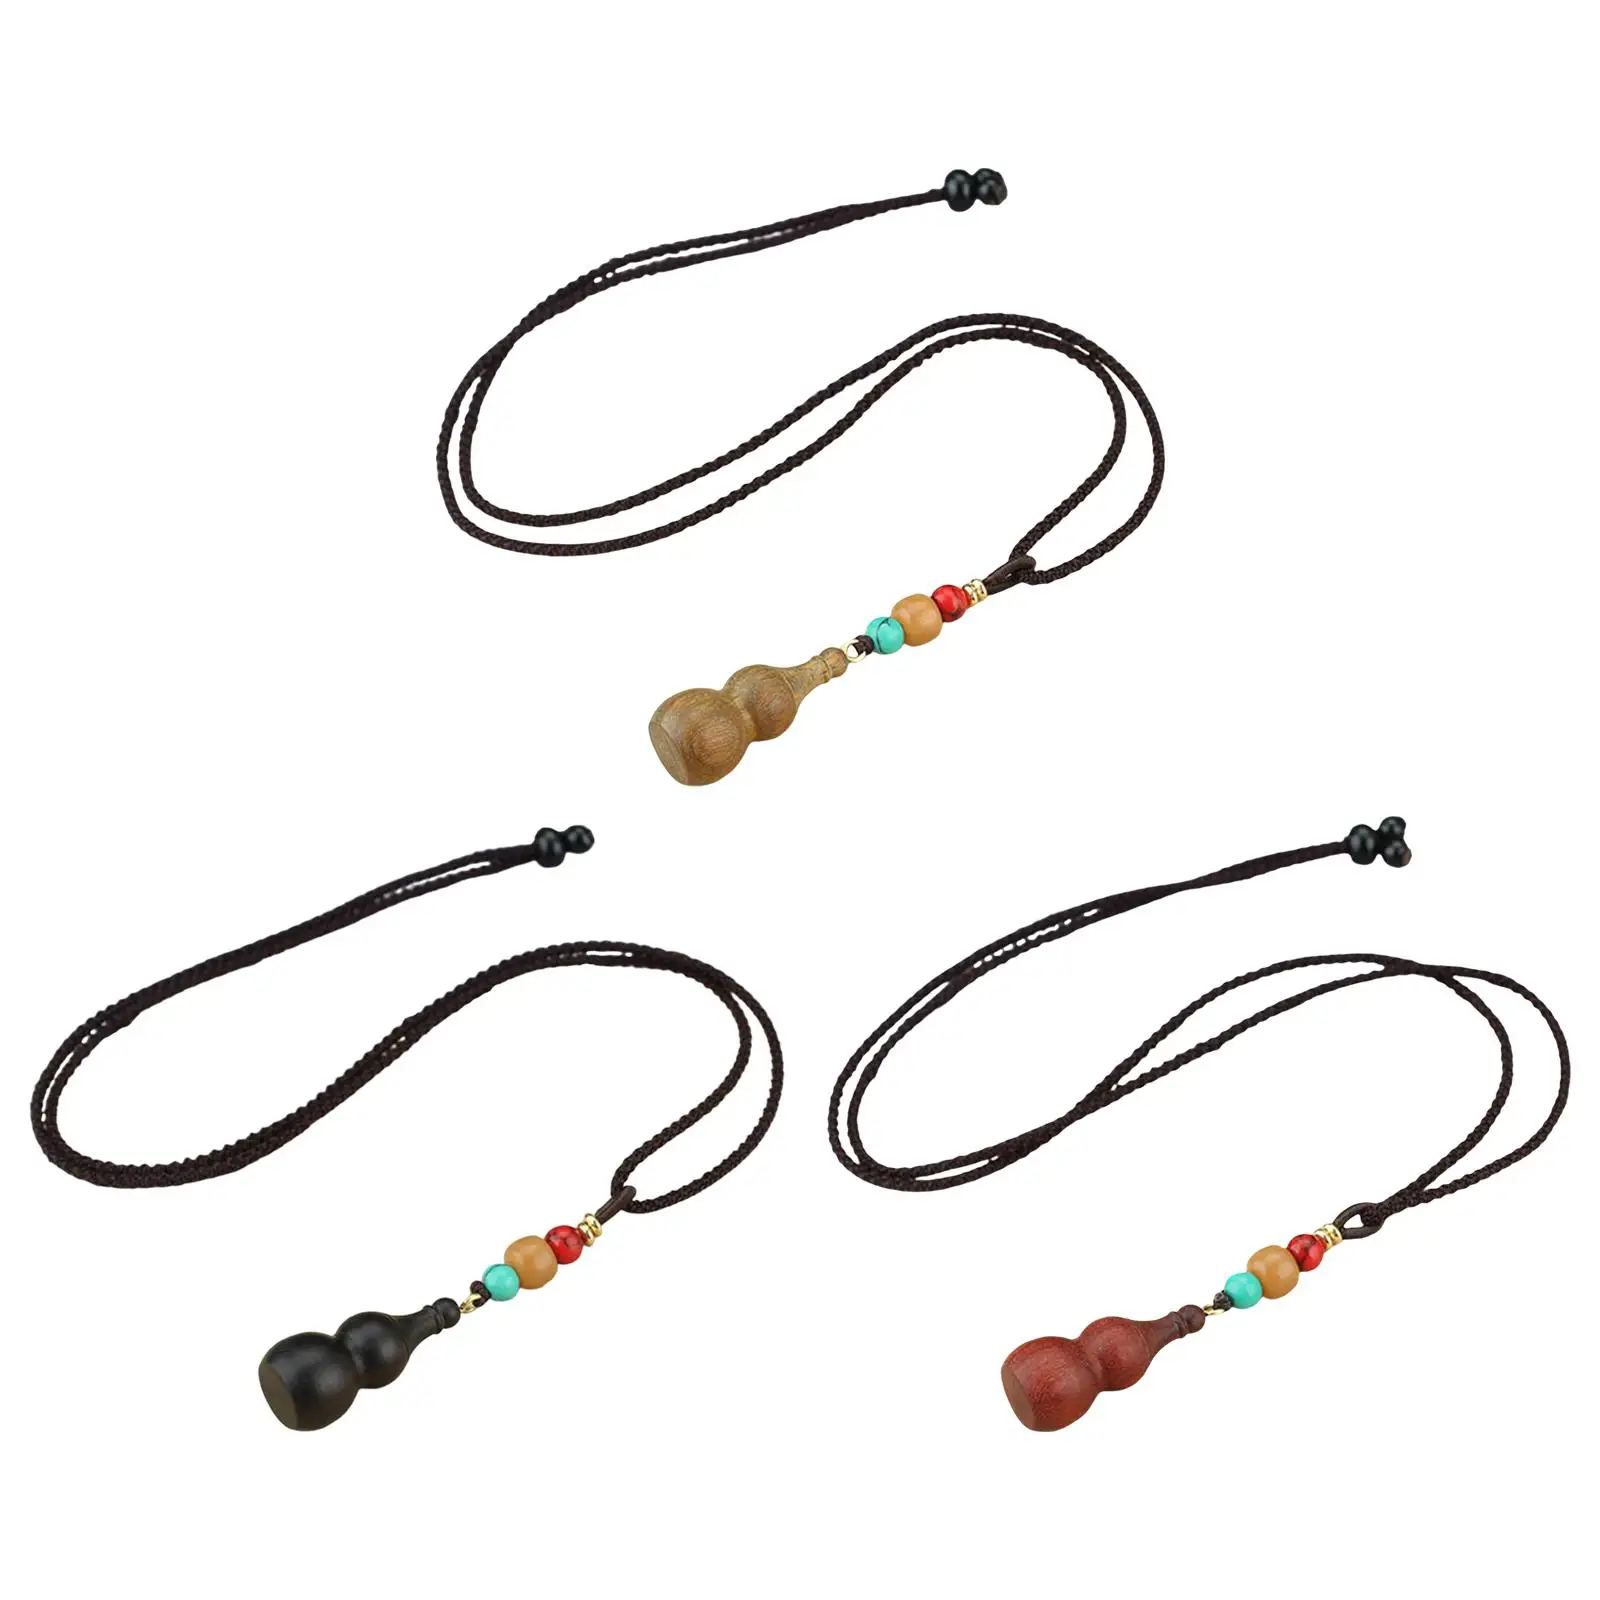 Vintage Style Long Necklaces, Decor Charms Necklace, Sweater Link Chain Ornament, Adjustable Screwable Gourd Pendant Necklace